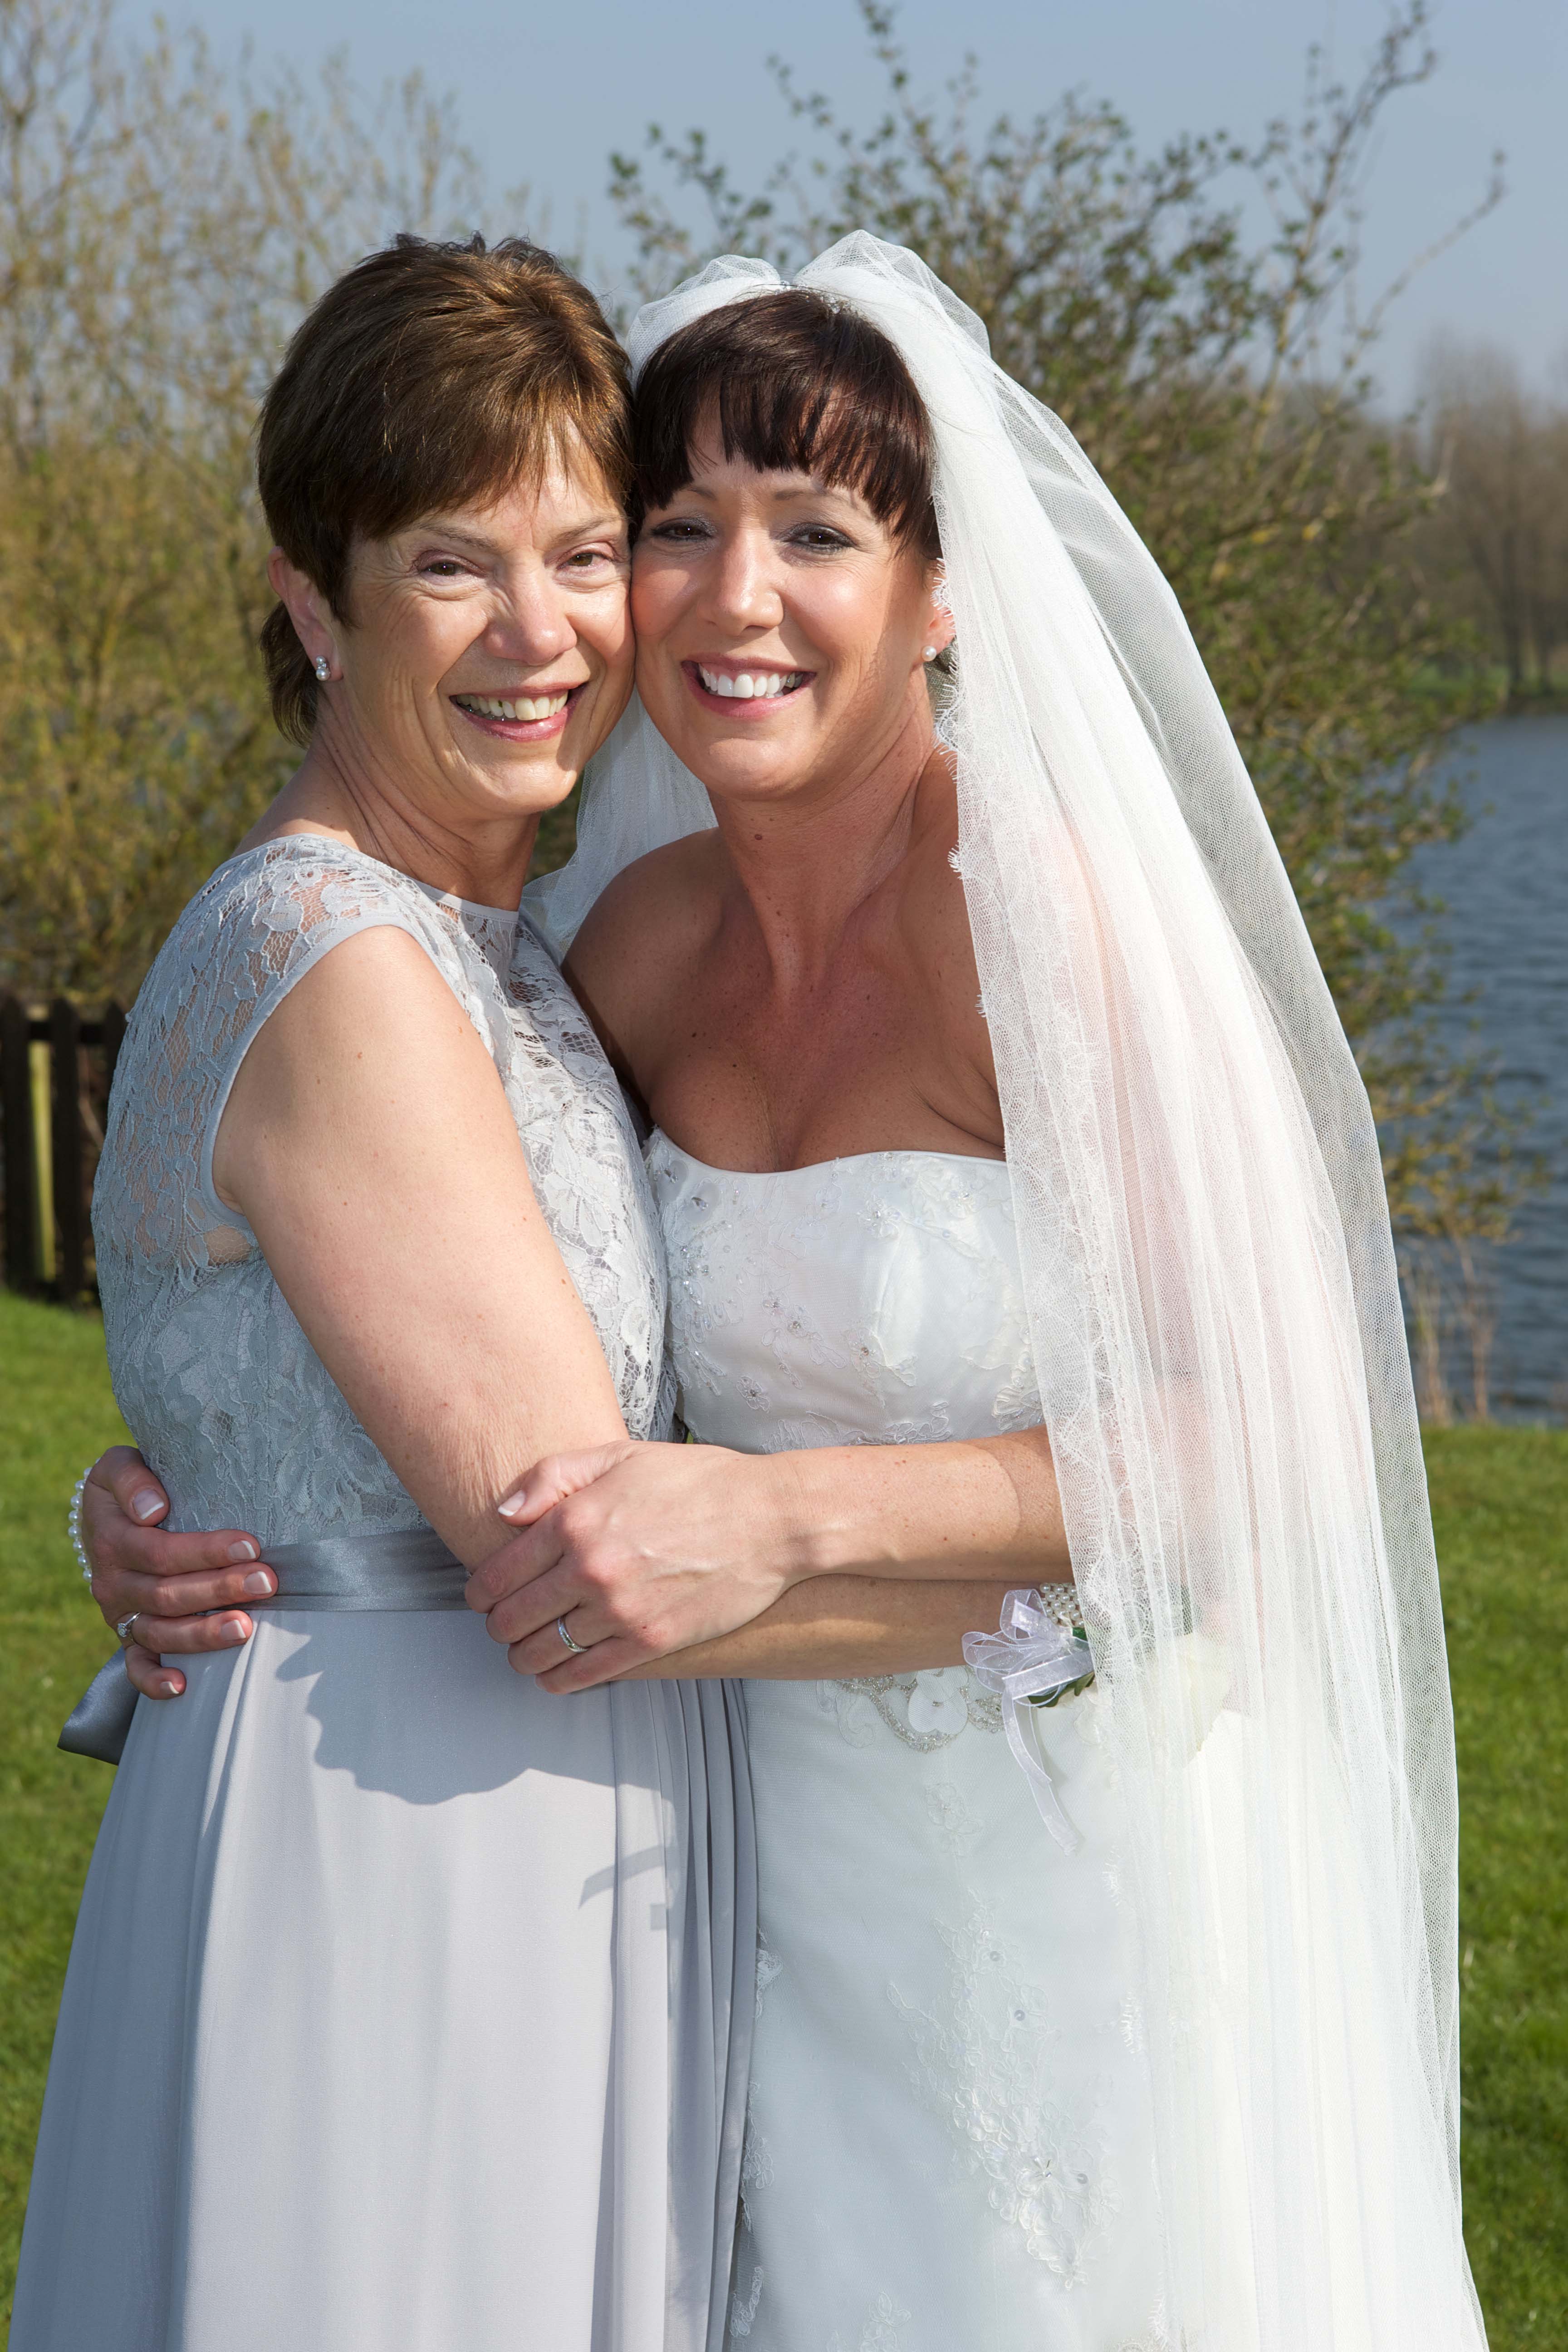 Real Wedding: Lovebirds in Wyboston Lakes